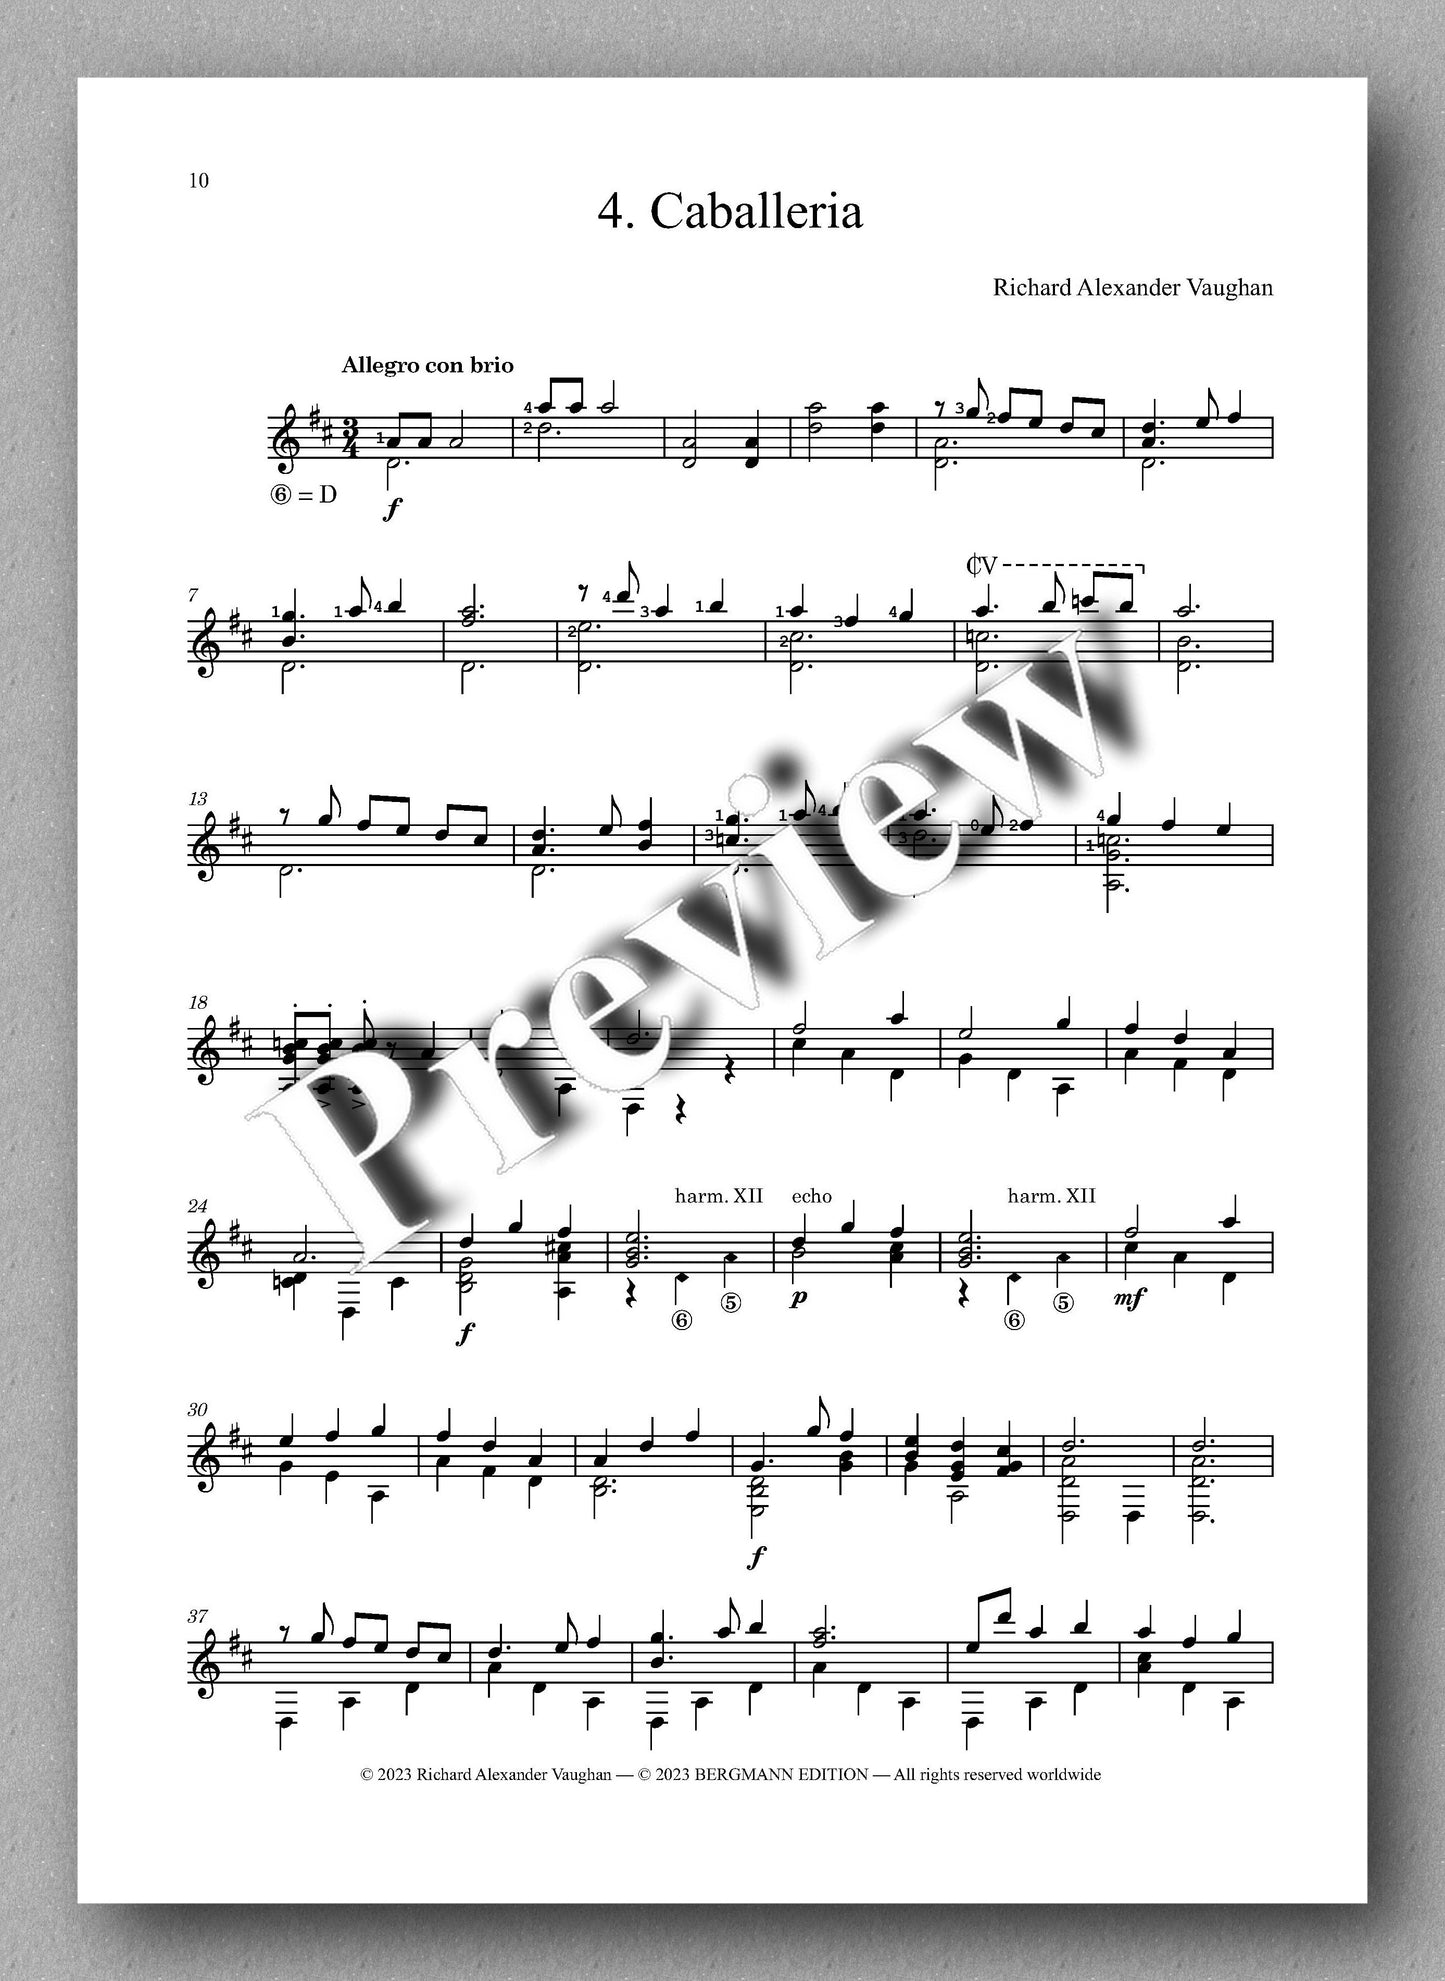 Richard Alexander Vaughan, Xixona Turrón - preview of the music score 3